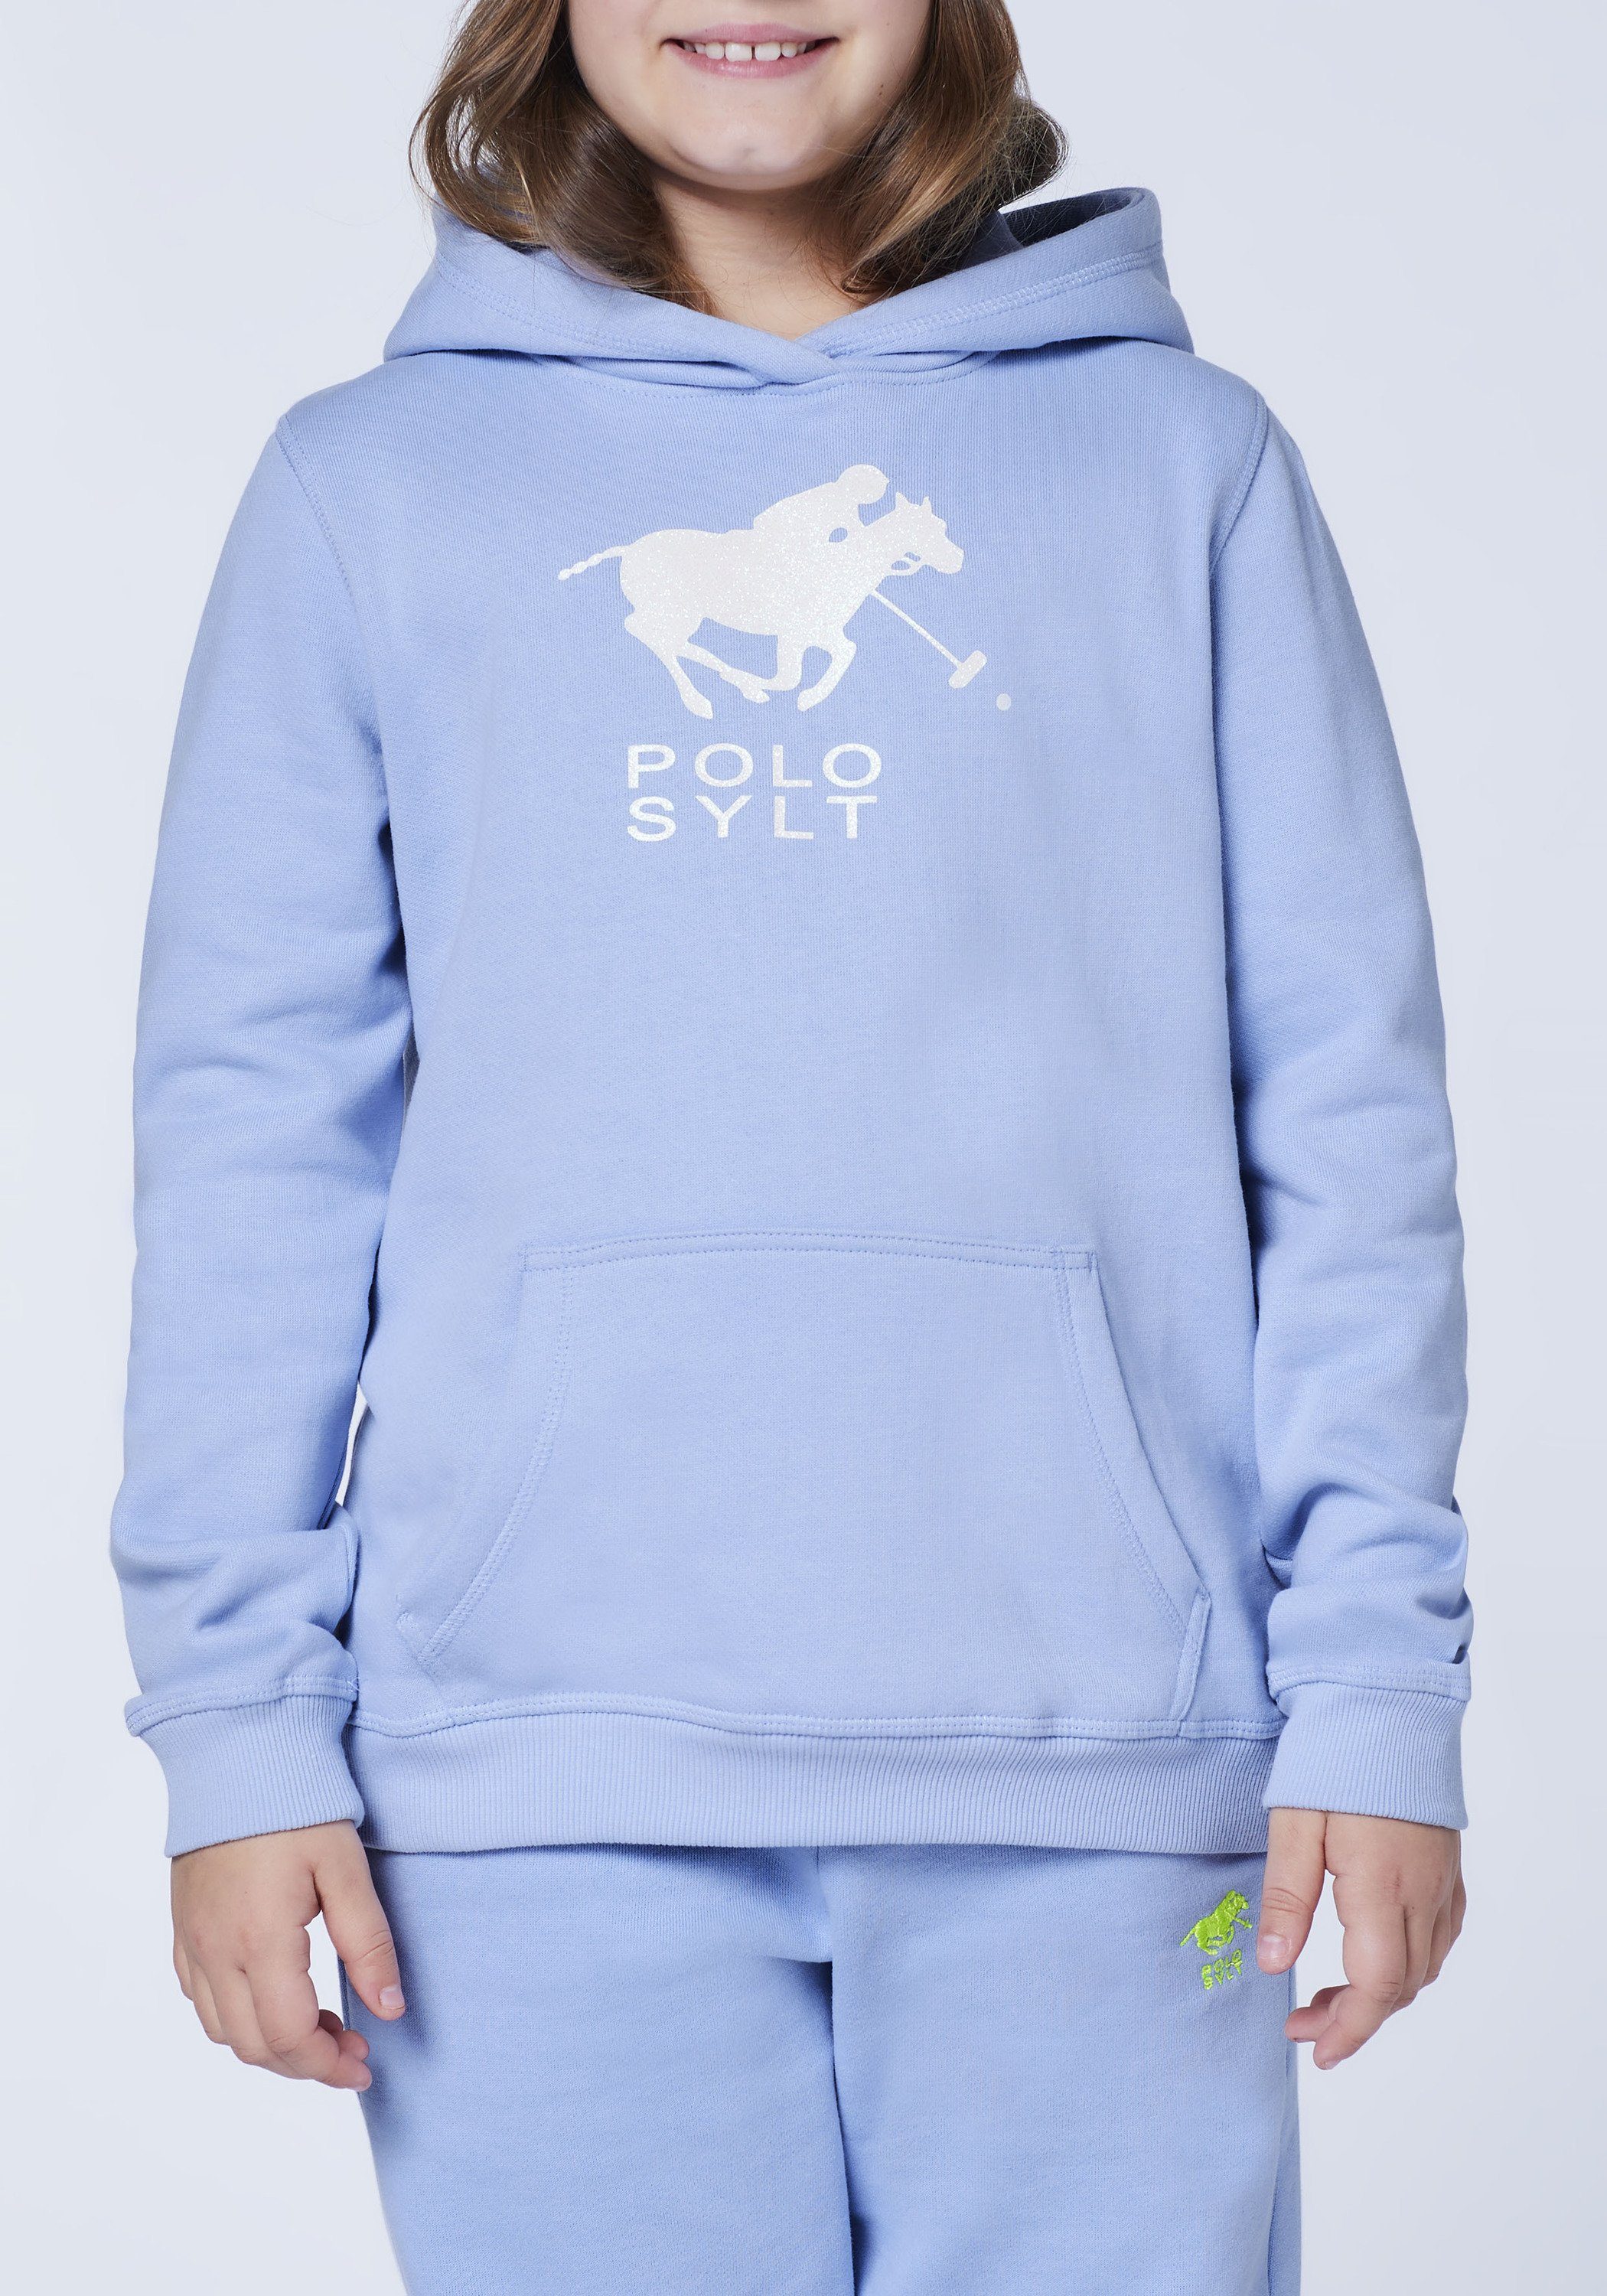 Polo Sylt Blue mit Label-Motiv Sweatshirt glitzerndem Brunnera